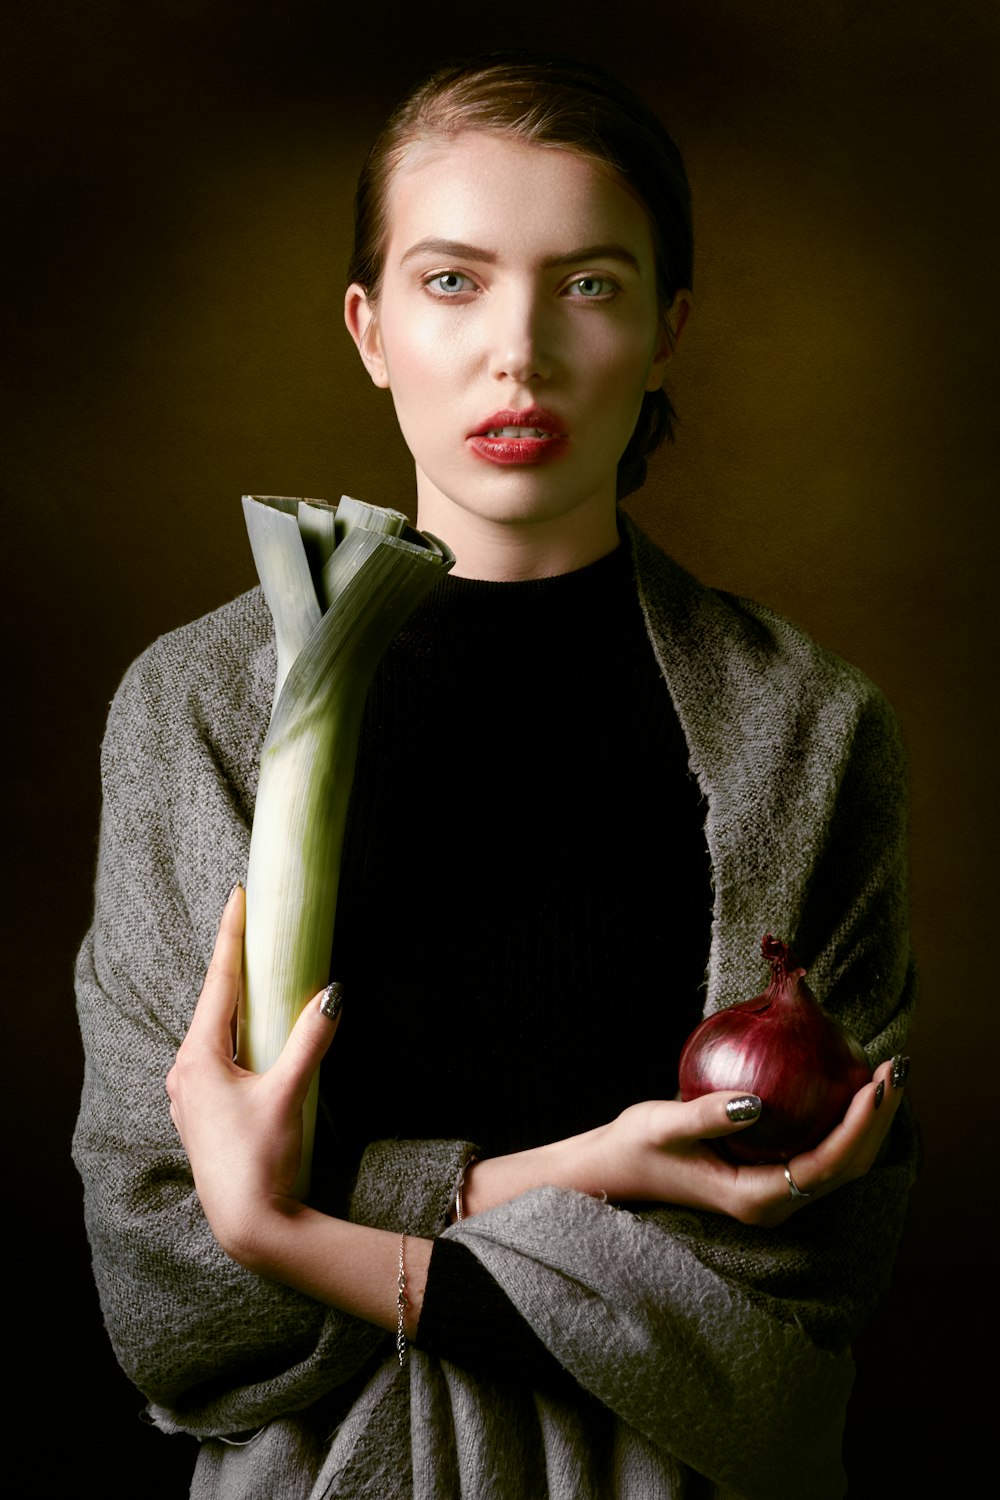 man in gray blazer holding red apple